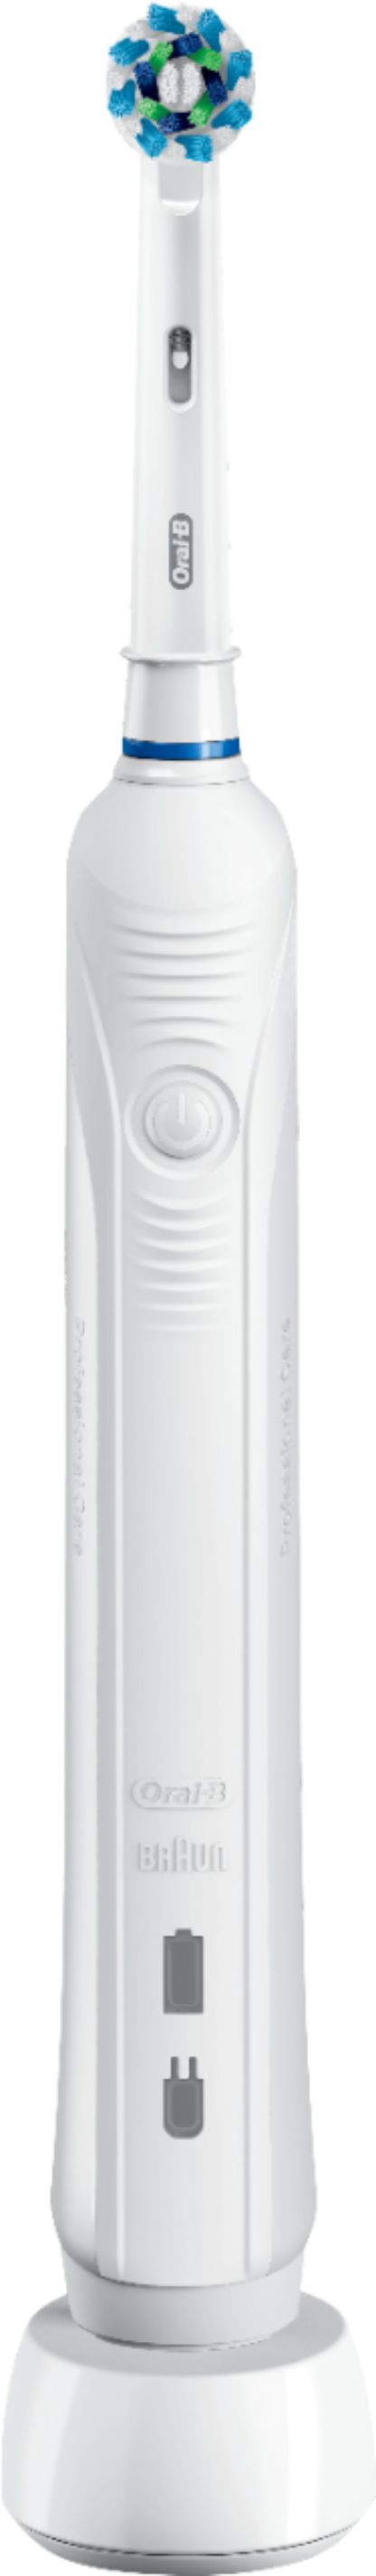 Ideaal Vertrouwen op toevoegen aan Oral-B Pro 1000 Electric Toothbrush White PC-1000 - Best Buy